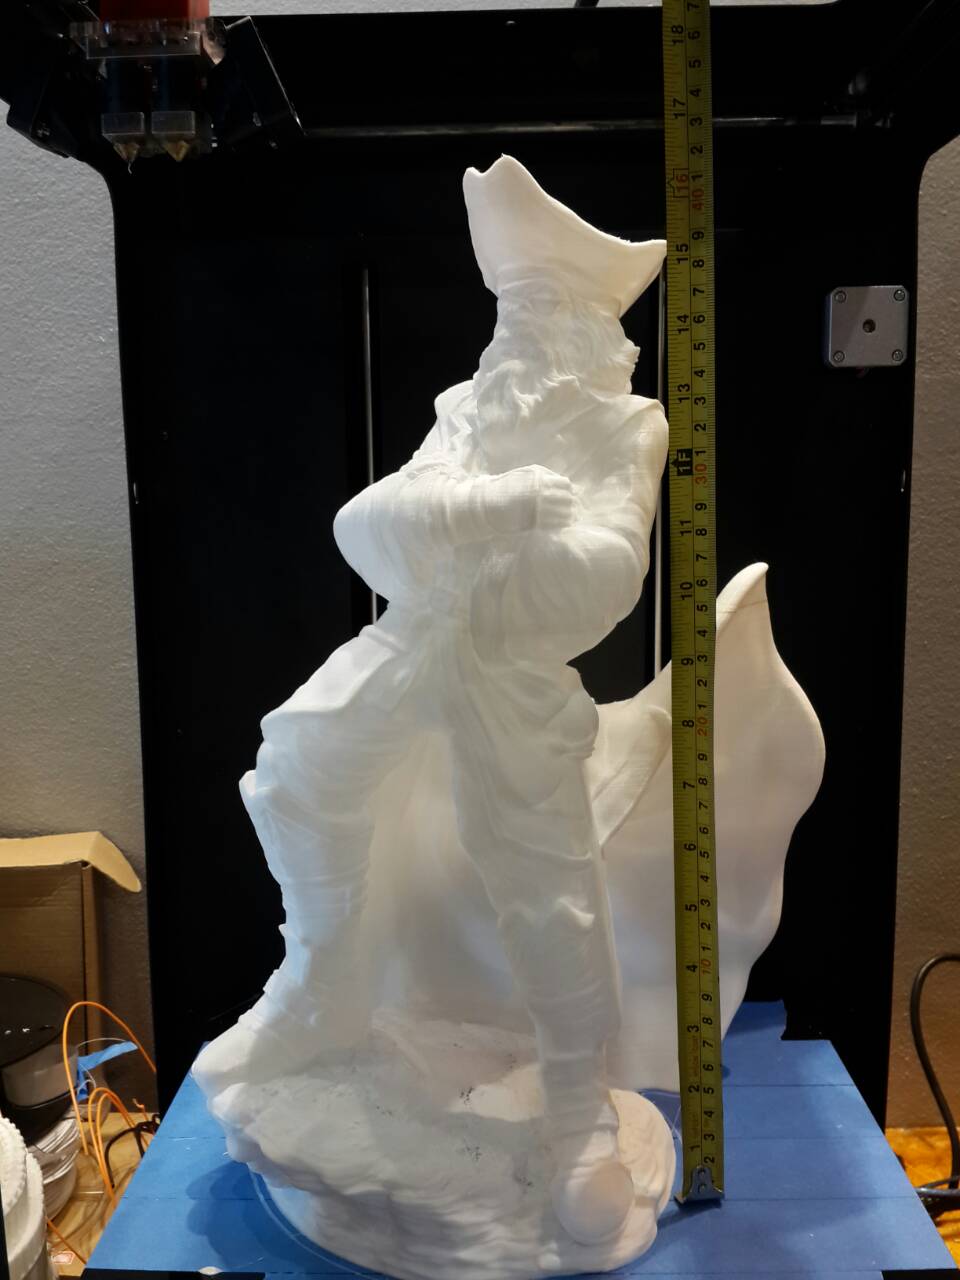 3D Print โมเดลขนาดใหญ่ จาก Max350 (มี Video ประกอบ)